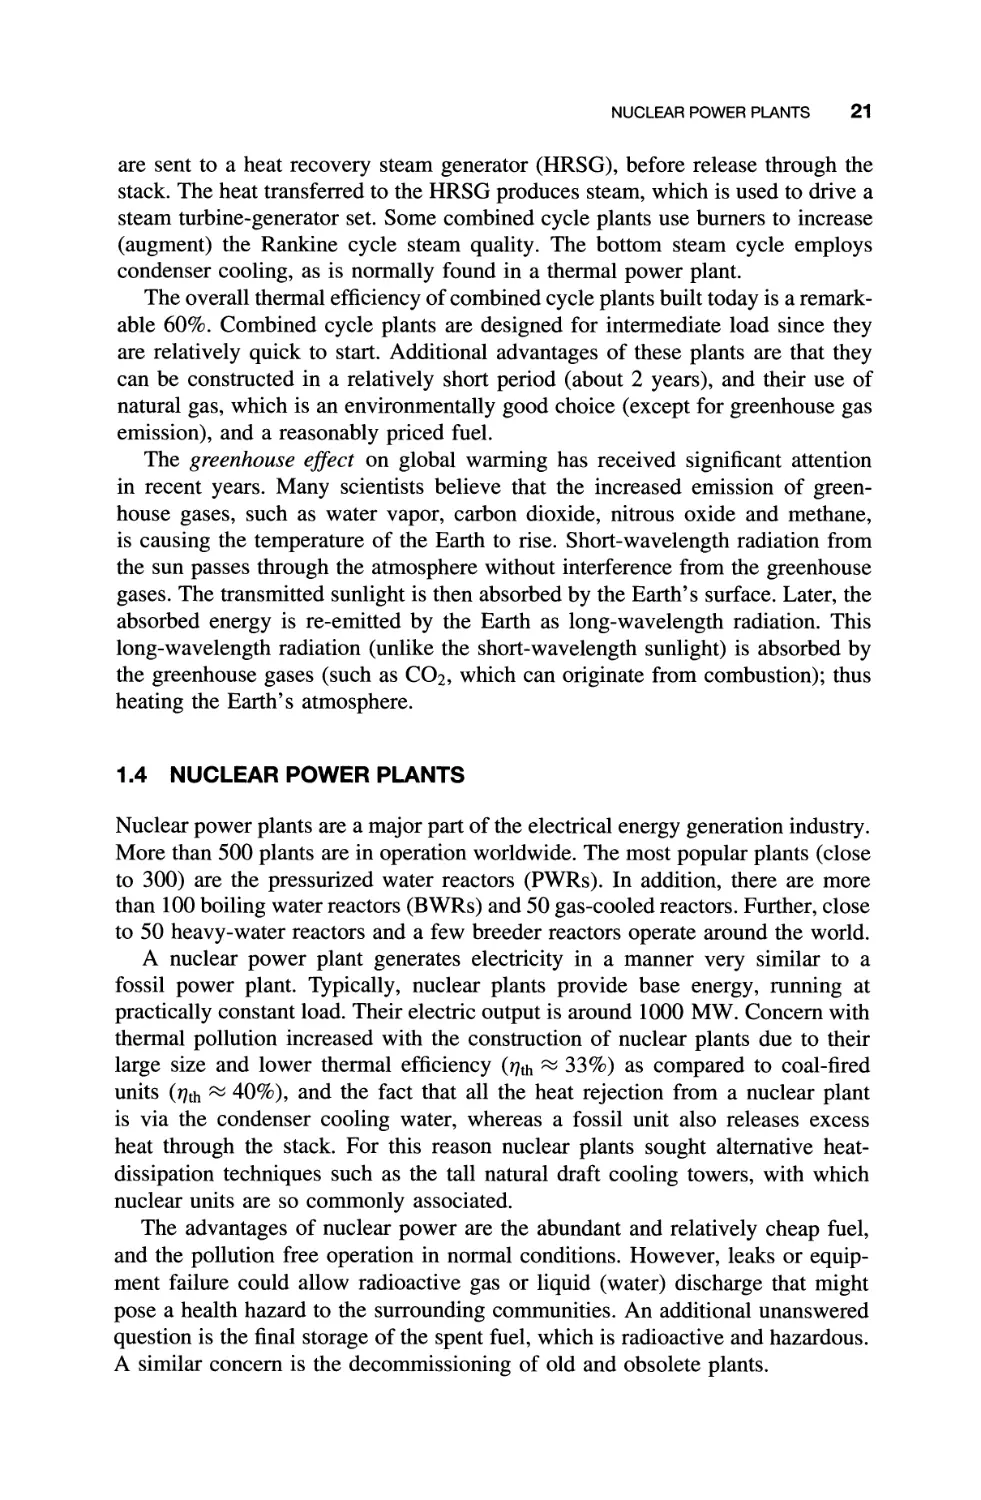 1.4 Nuclear Power Plants